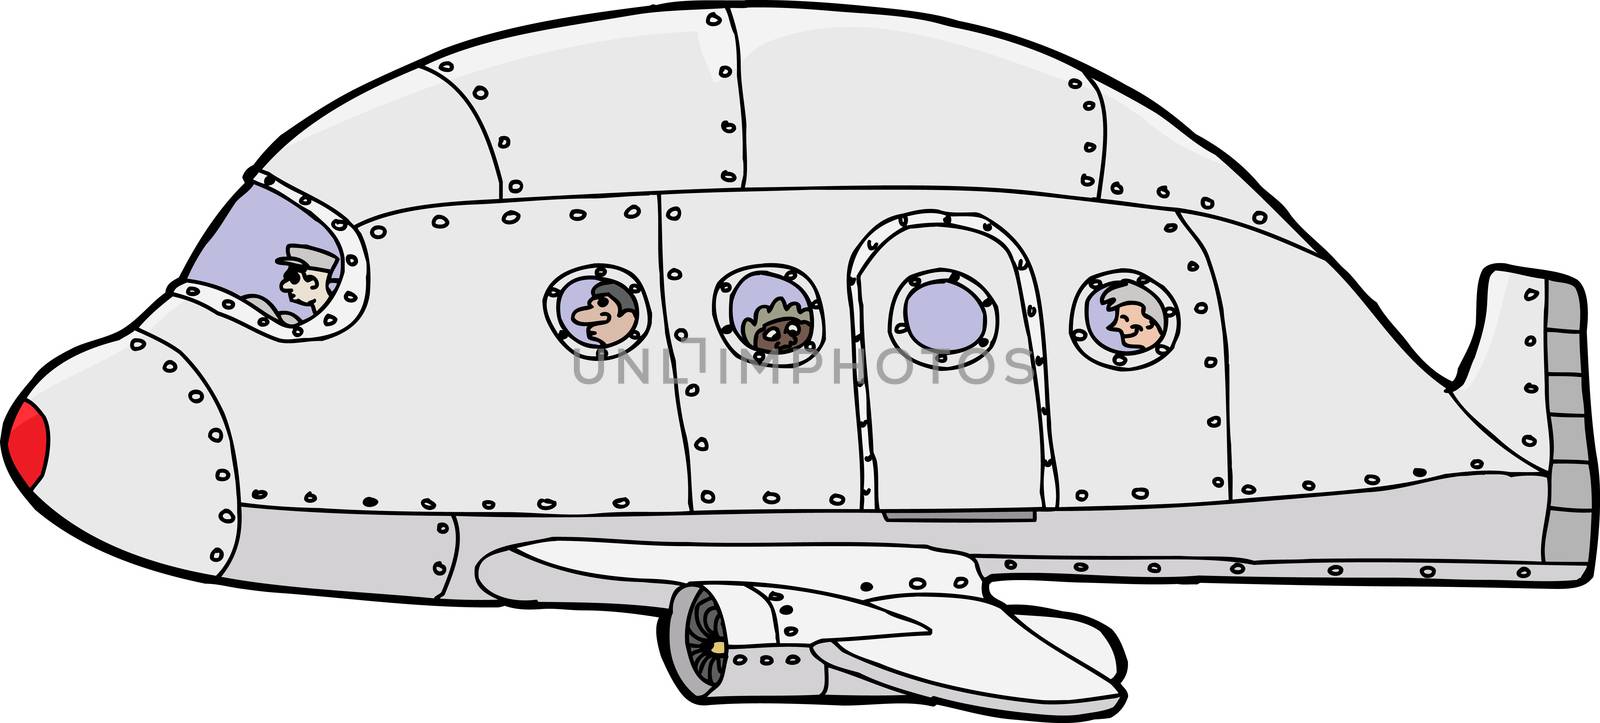 Single hand drawn passenger plane with pilot and passengers